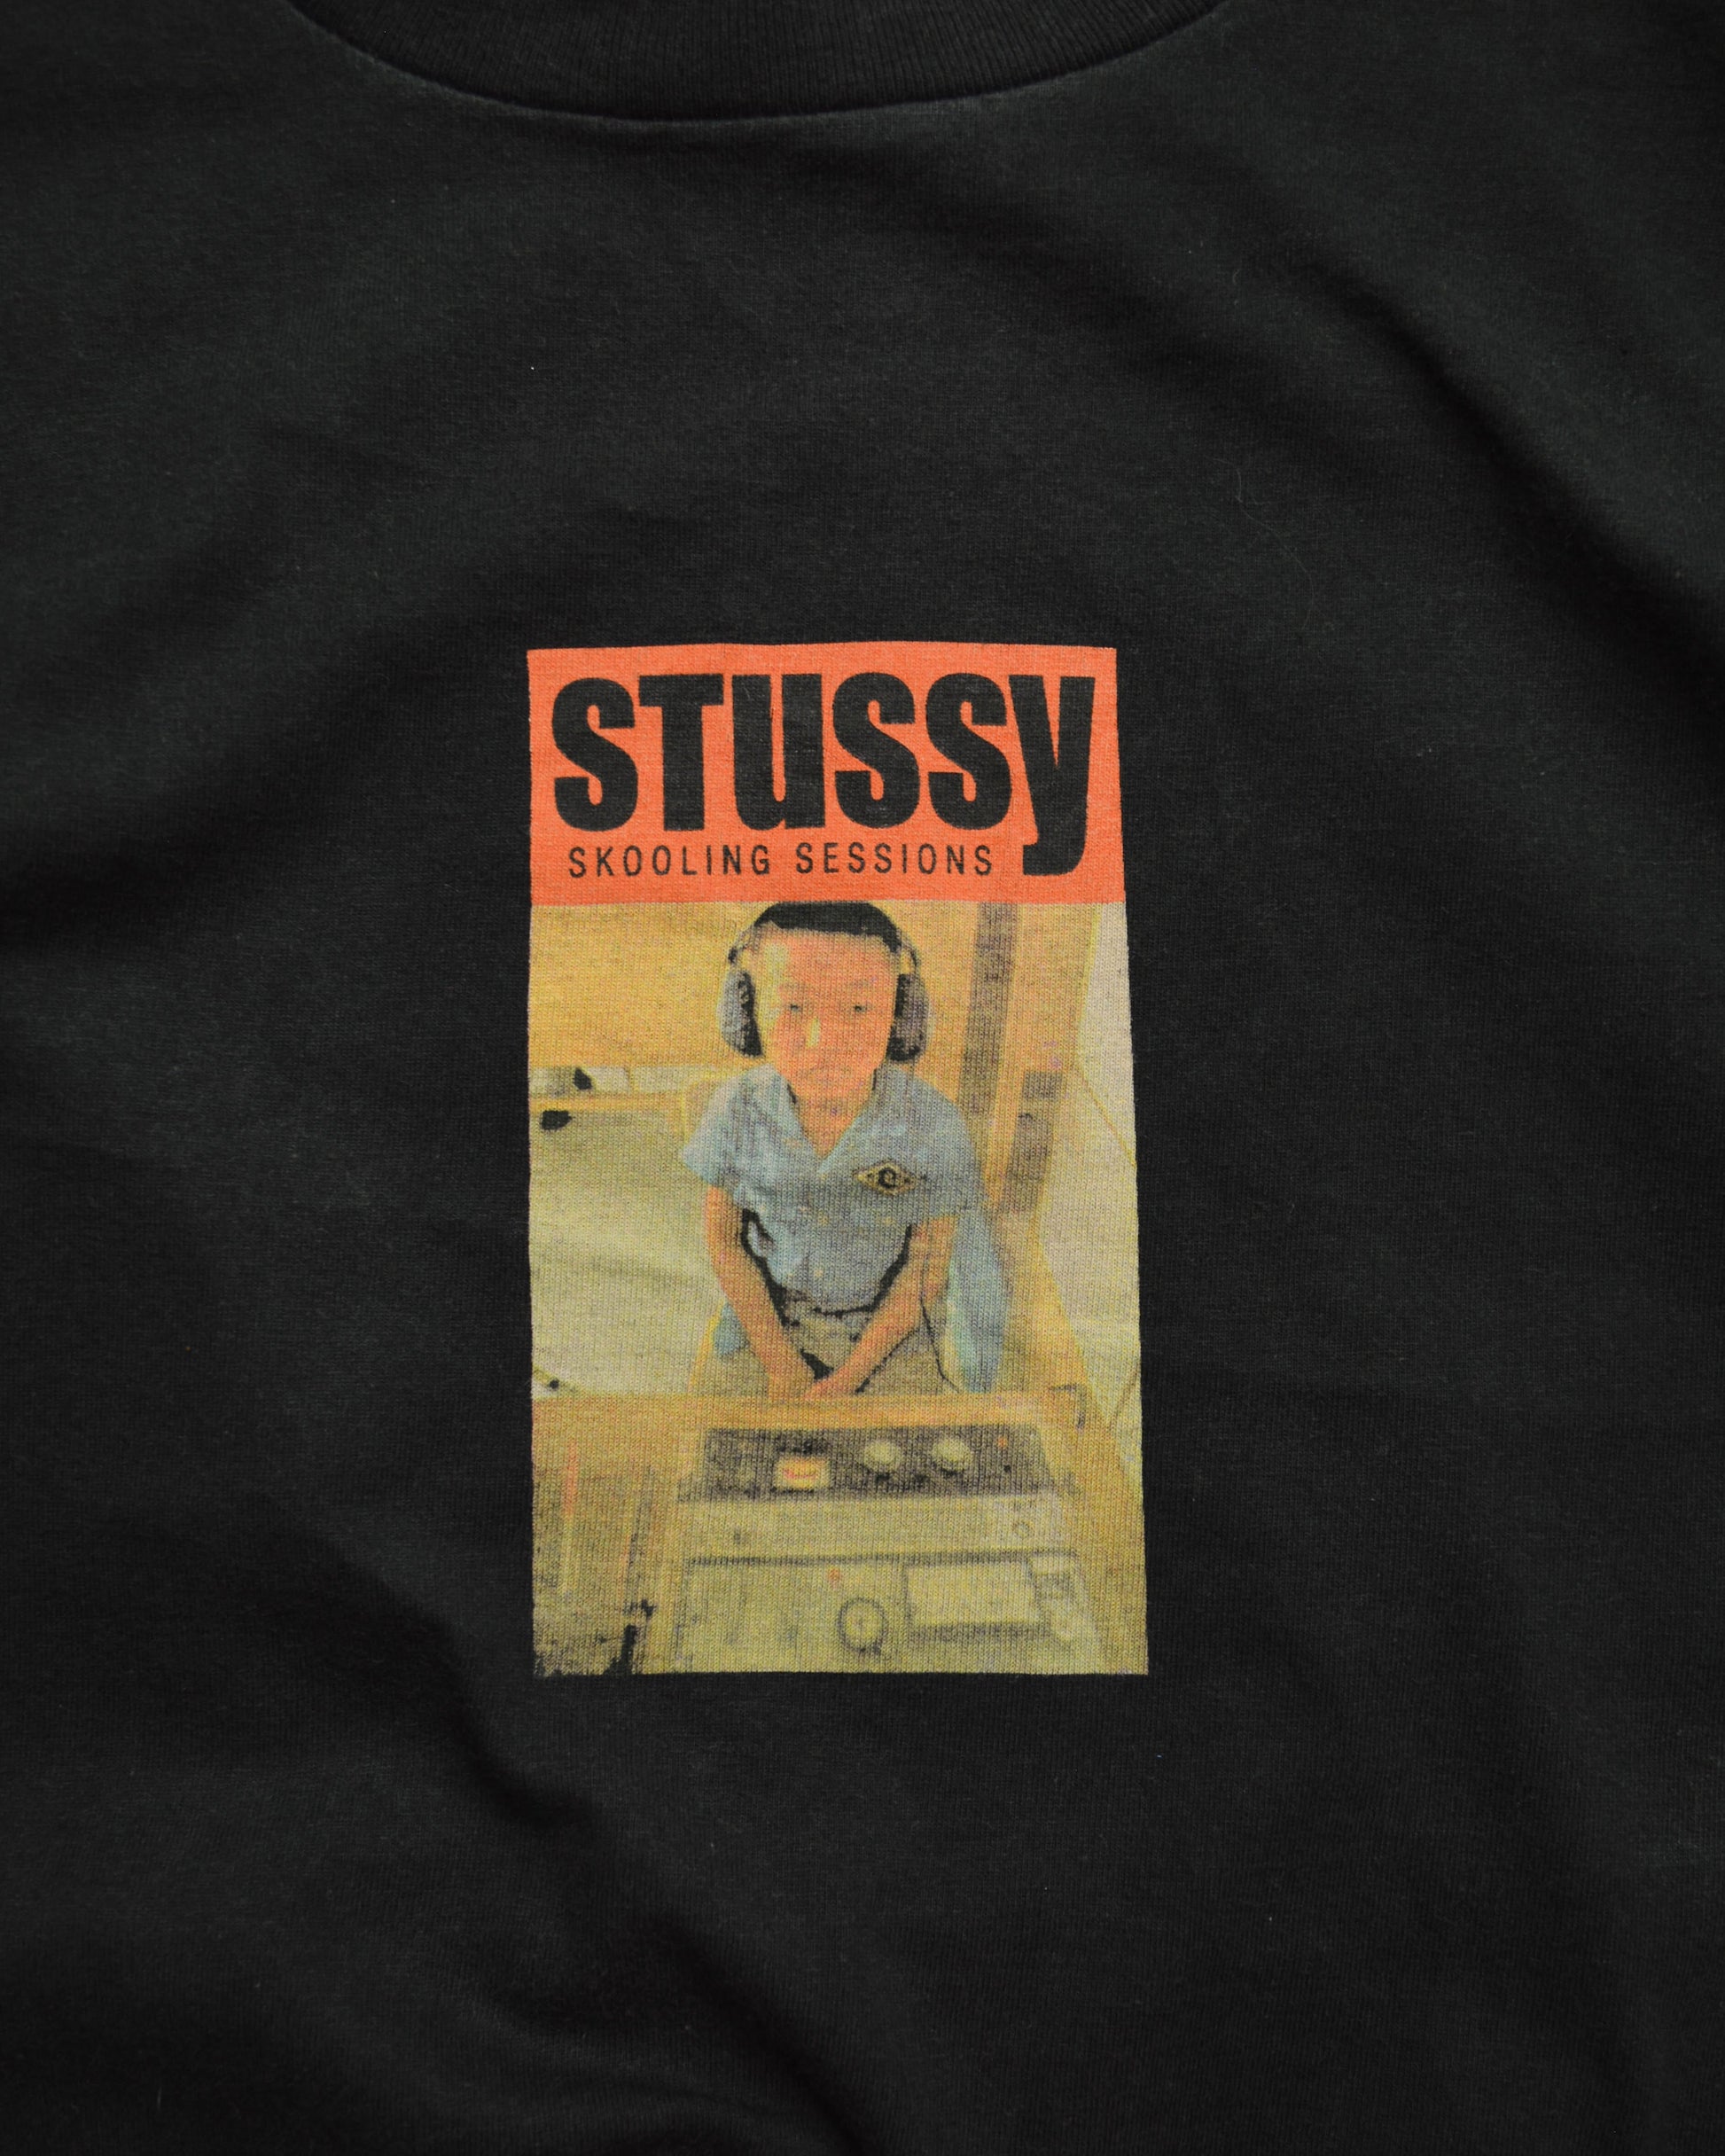 Stussy Skooling Session Graphic T-shirt (L)